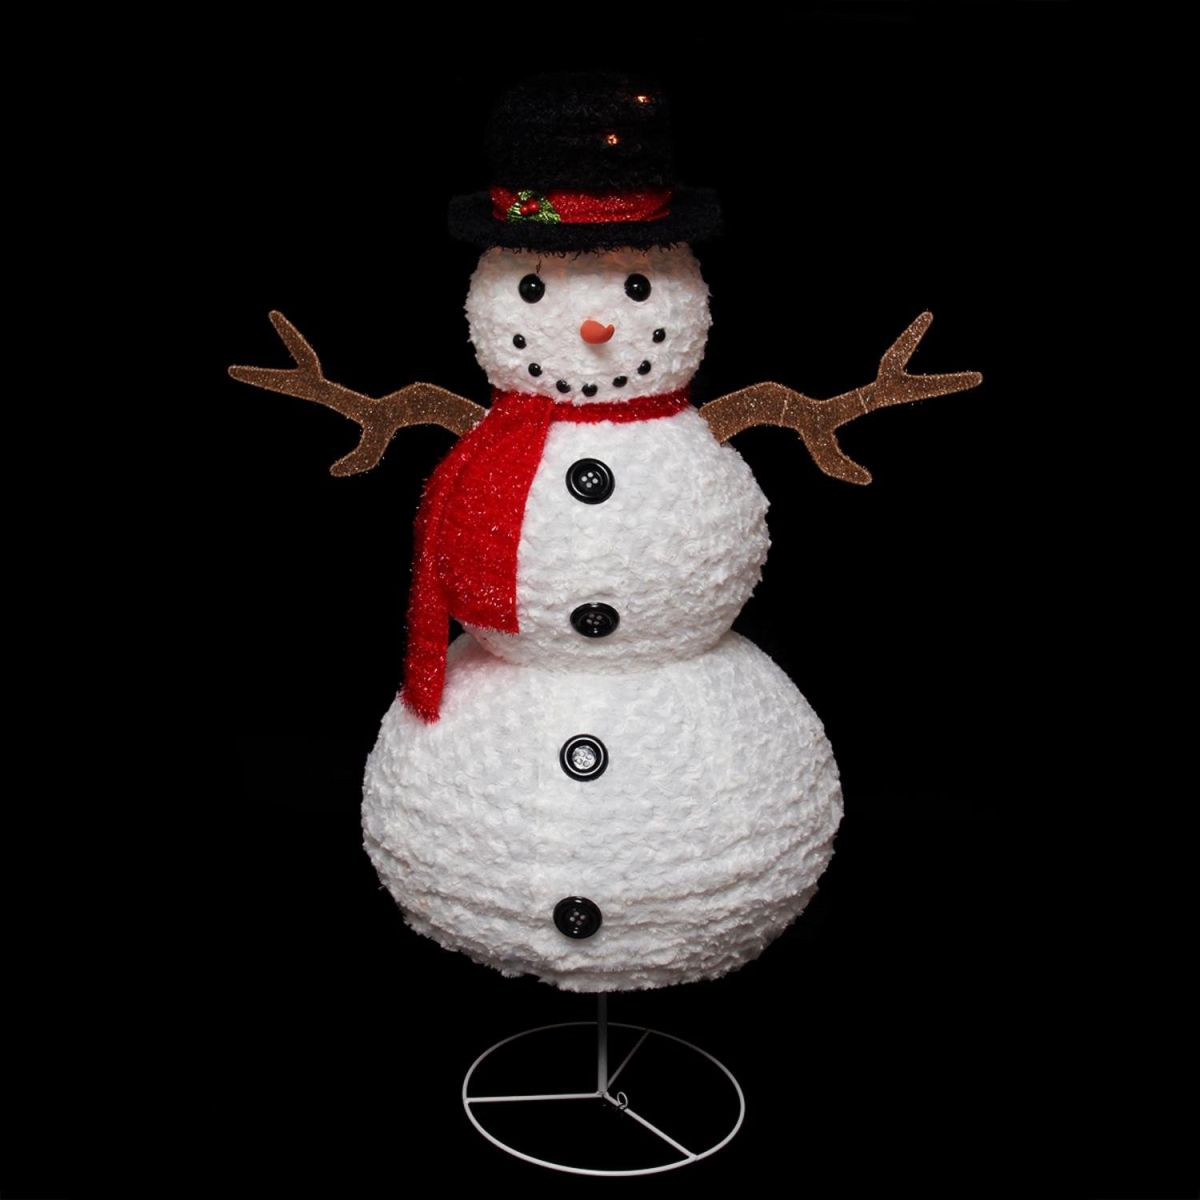 252393 48 In. Holiday Wonderland Skating Snowman Outdoor Decoration